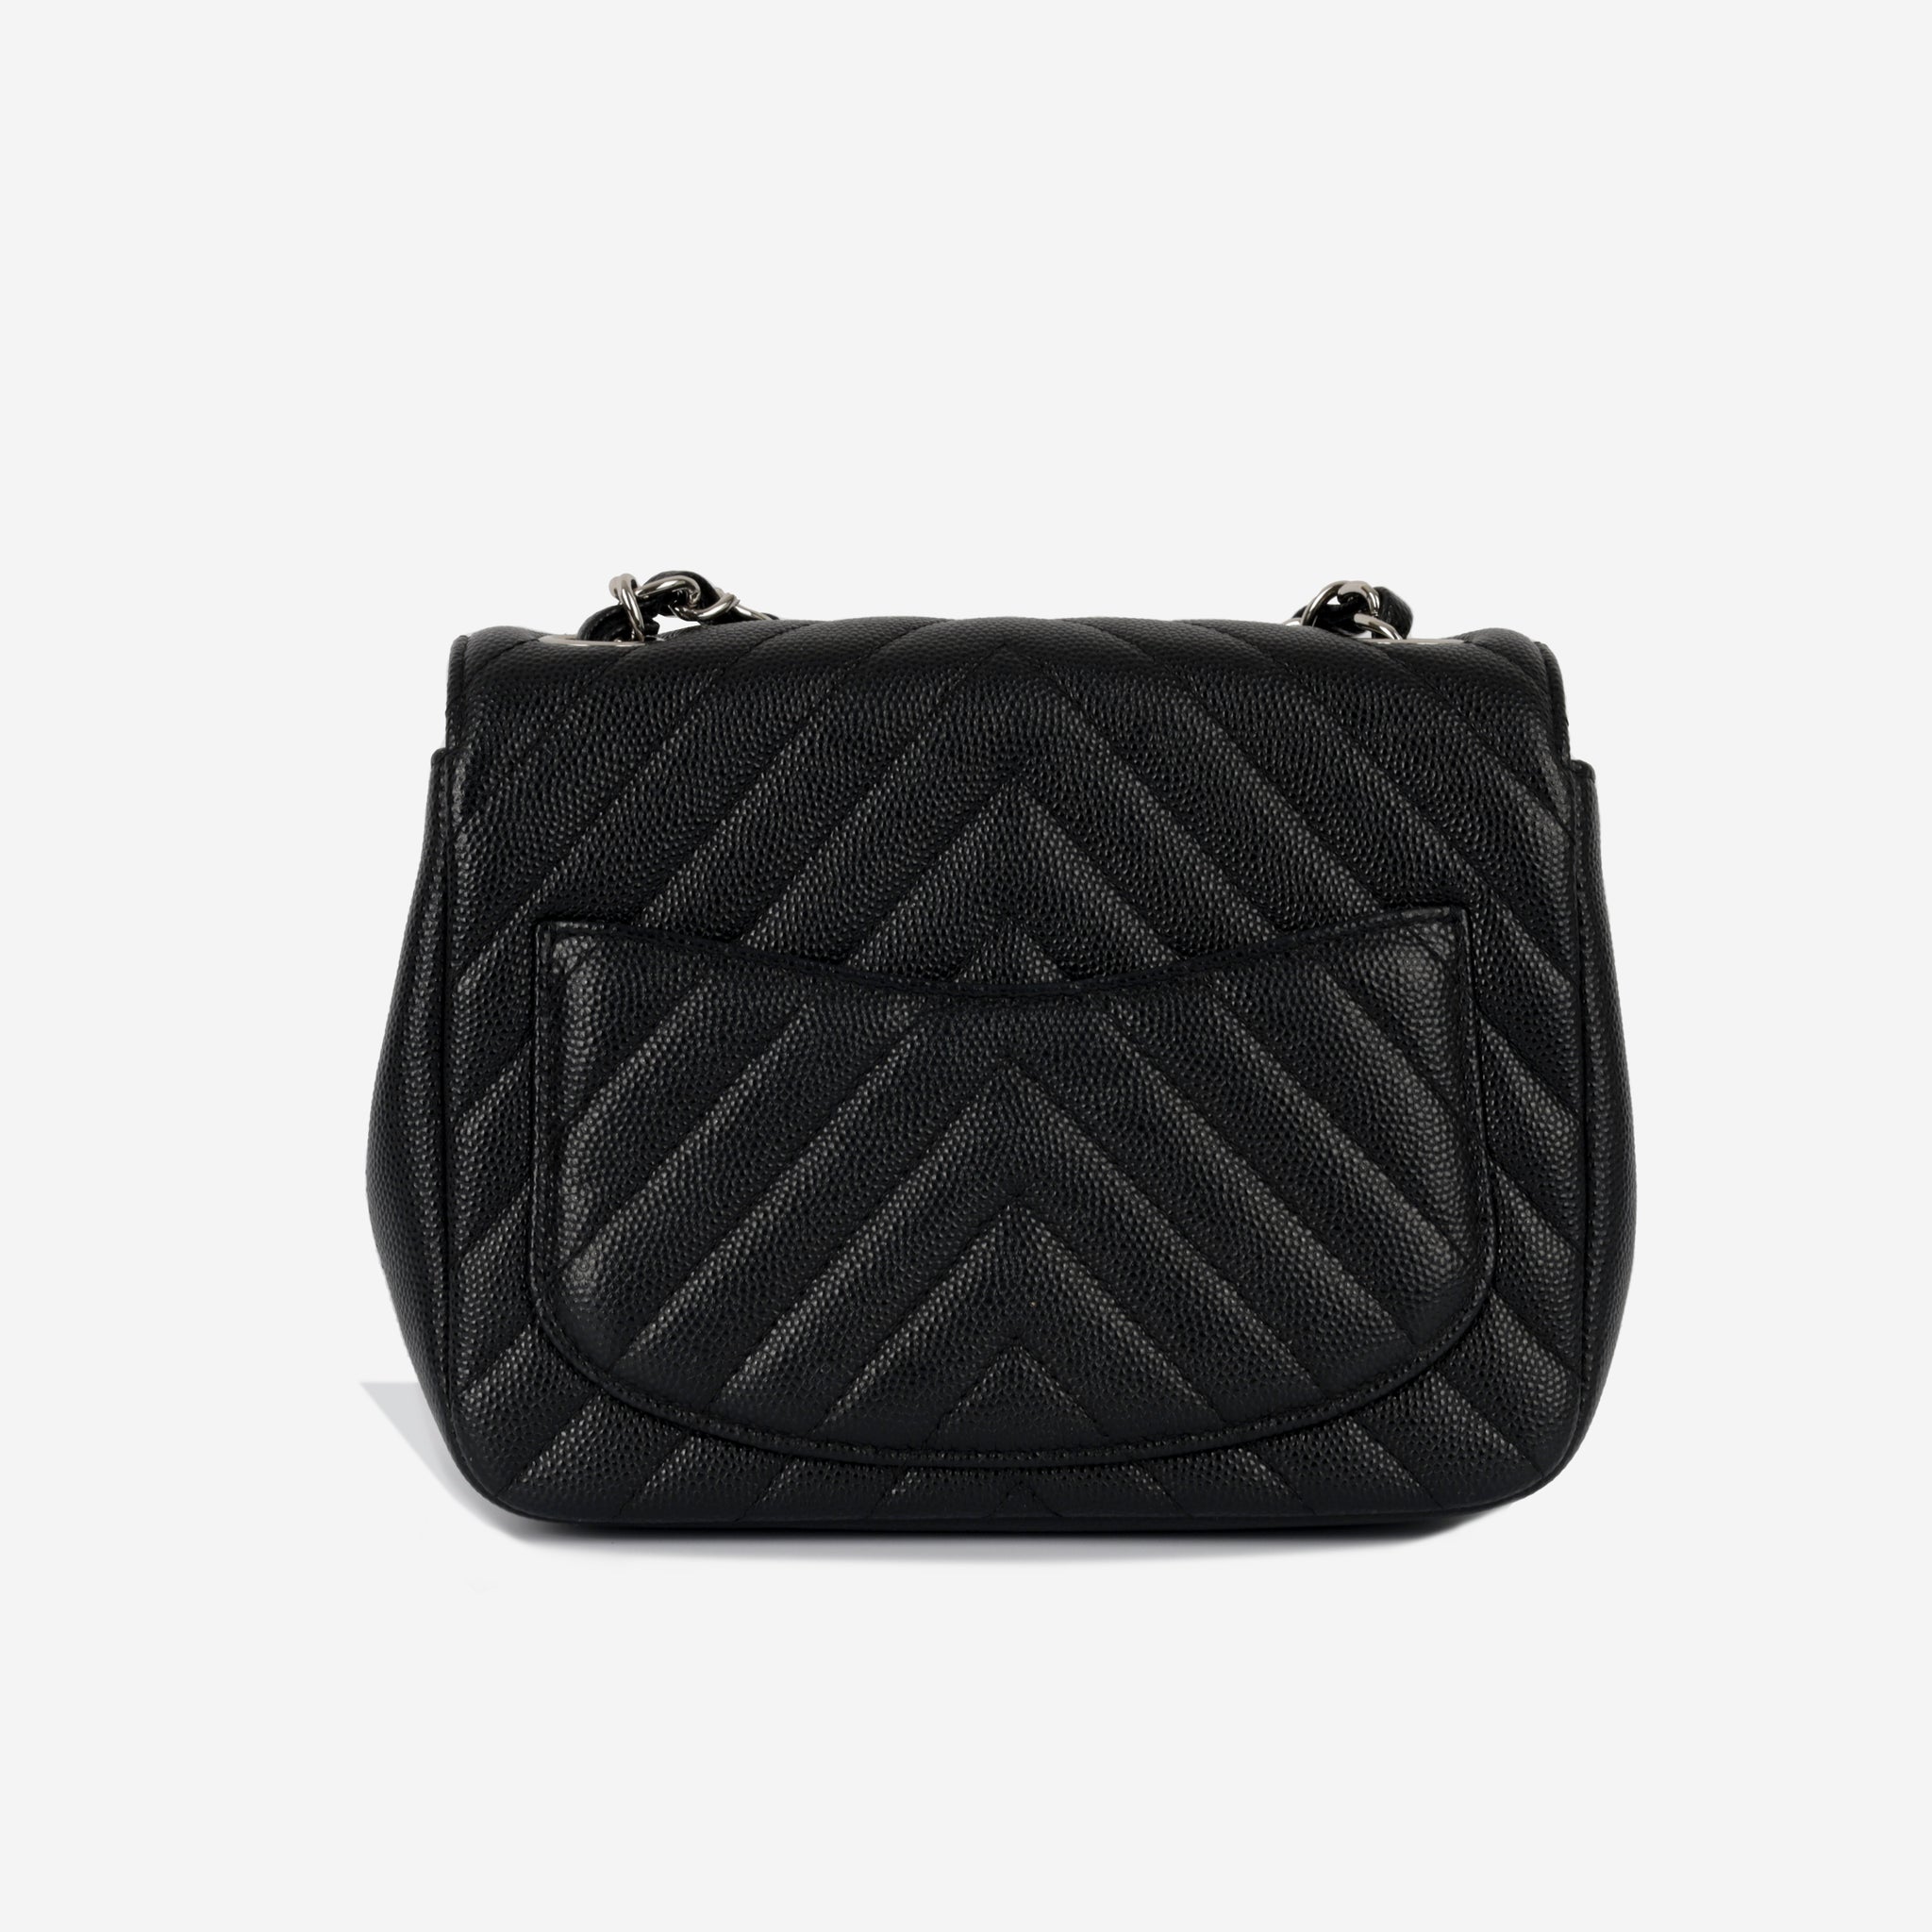 Chanel - Mini Square Classic Flap Bag - Black Caviar - SHW - Immaculate